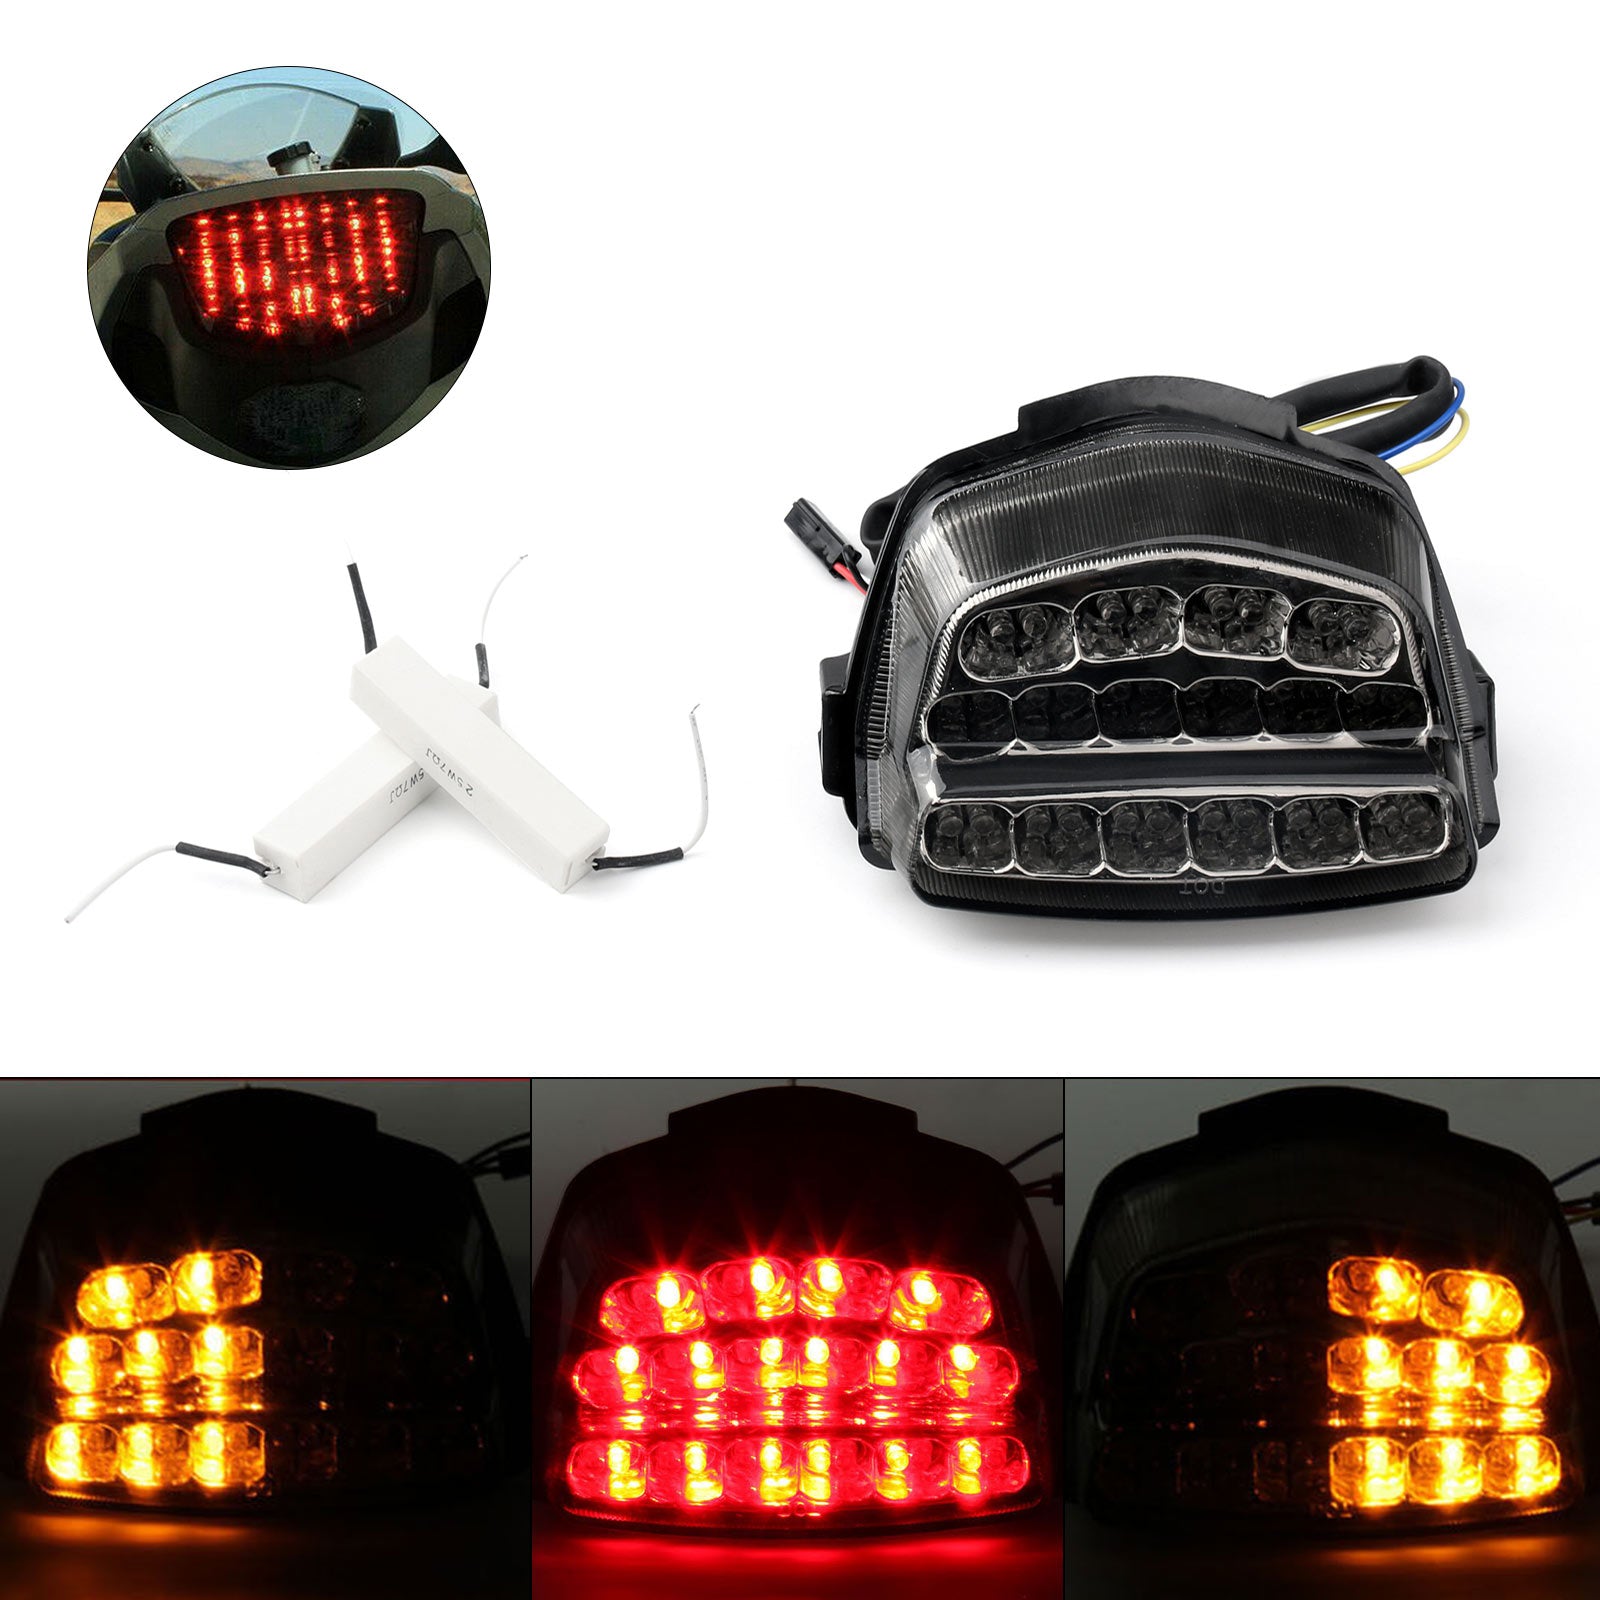 Integrierte LED-Rücklicht-Blinker für Honda CBR1000RR 2008–2012, transparent